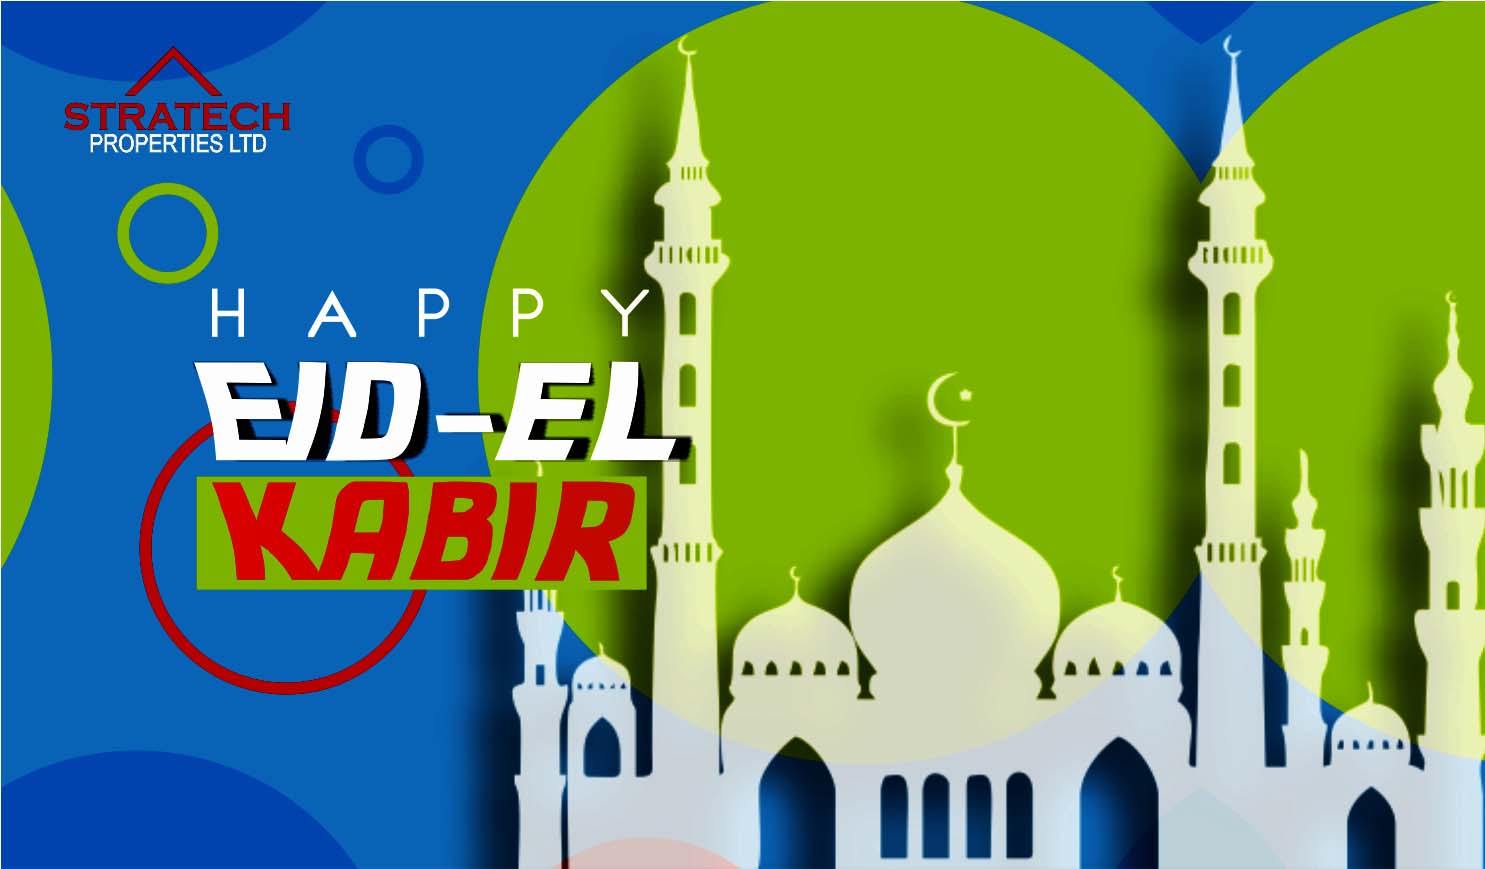 Happy EidEl KABIR Stratech Properties